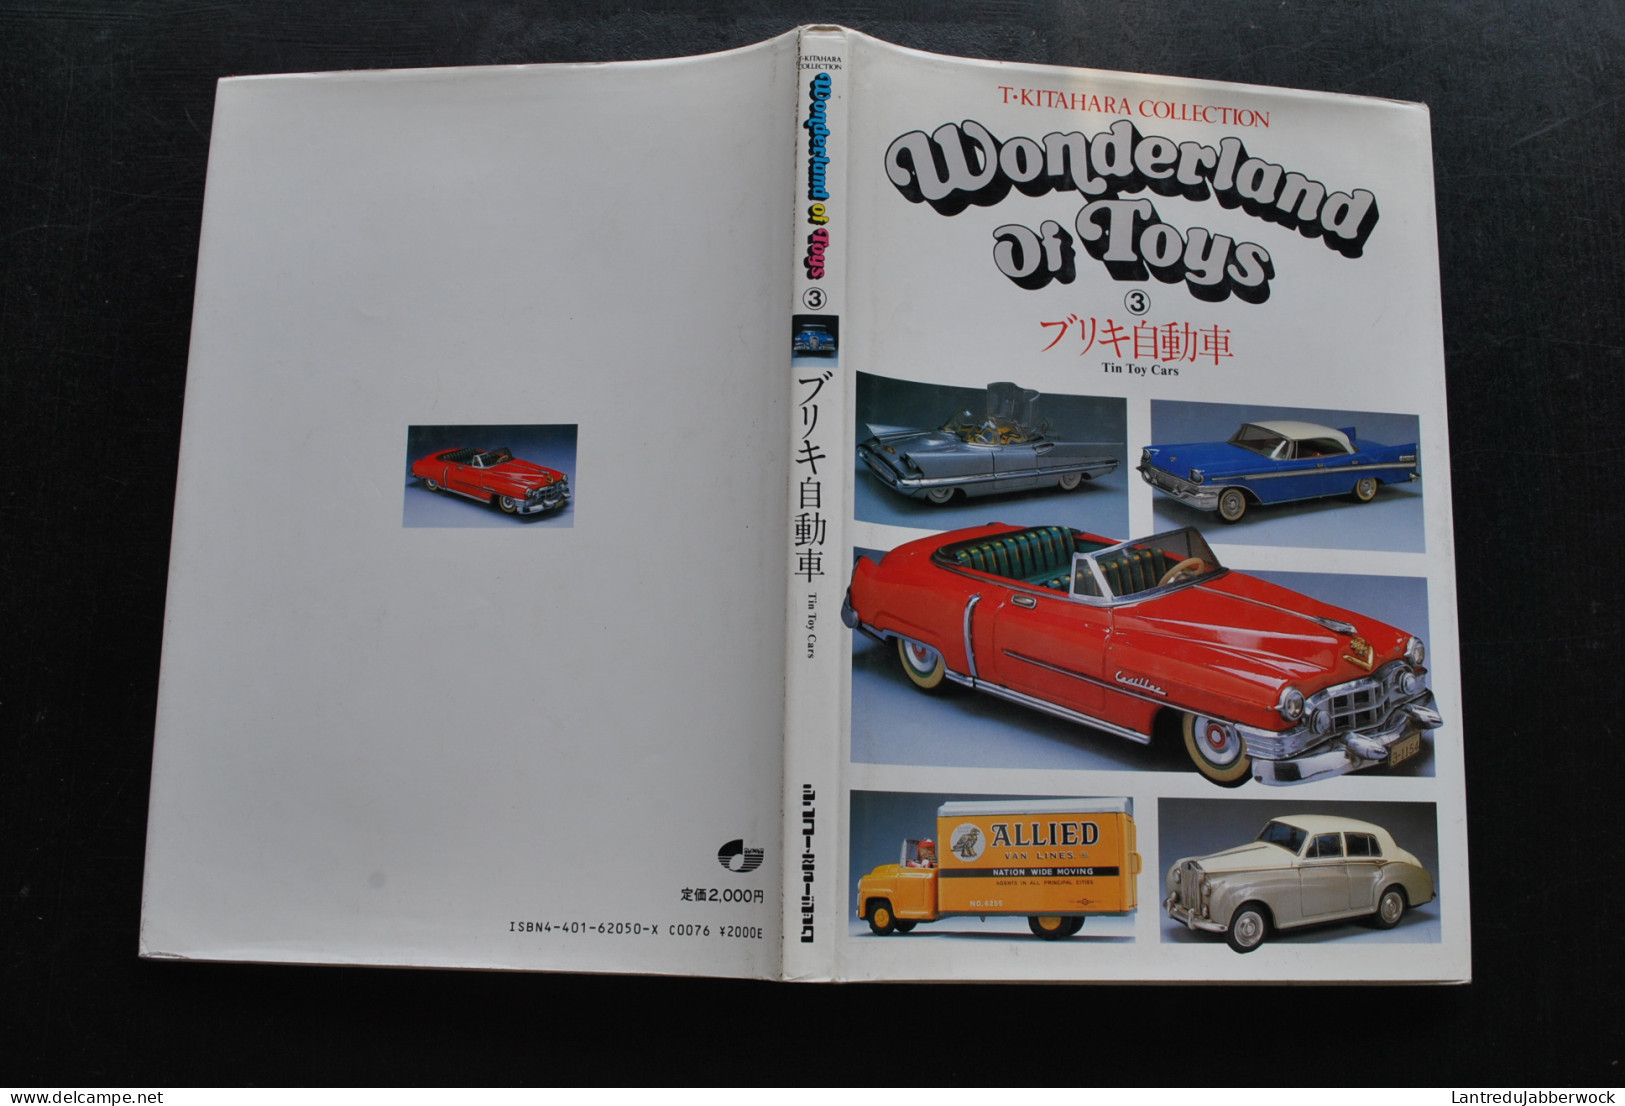 Wonderland Of Toys, Volume 3 : Tin Toy Cars, T. Kitahara Collection 1984 Marusan Bandai Asahi Yonezawa Masudaya Yoshiya - Kataloge & Prospekte